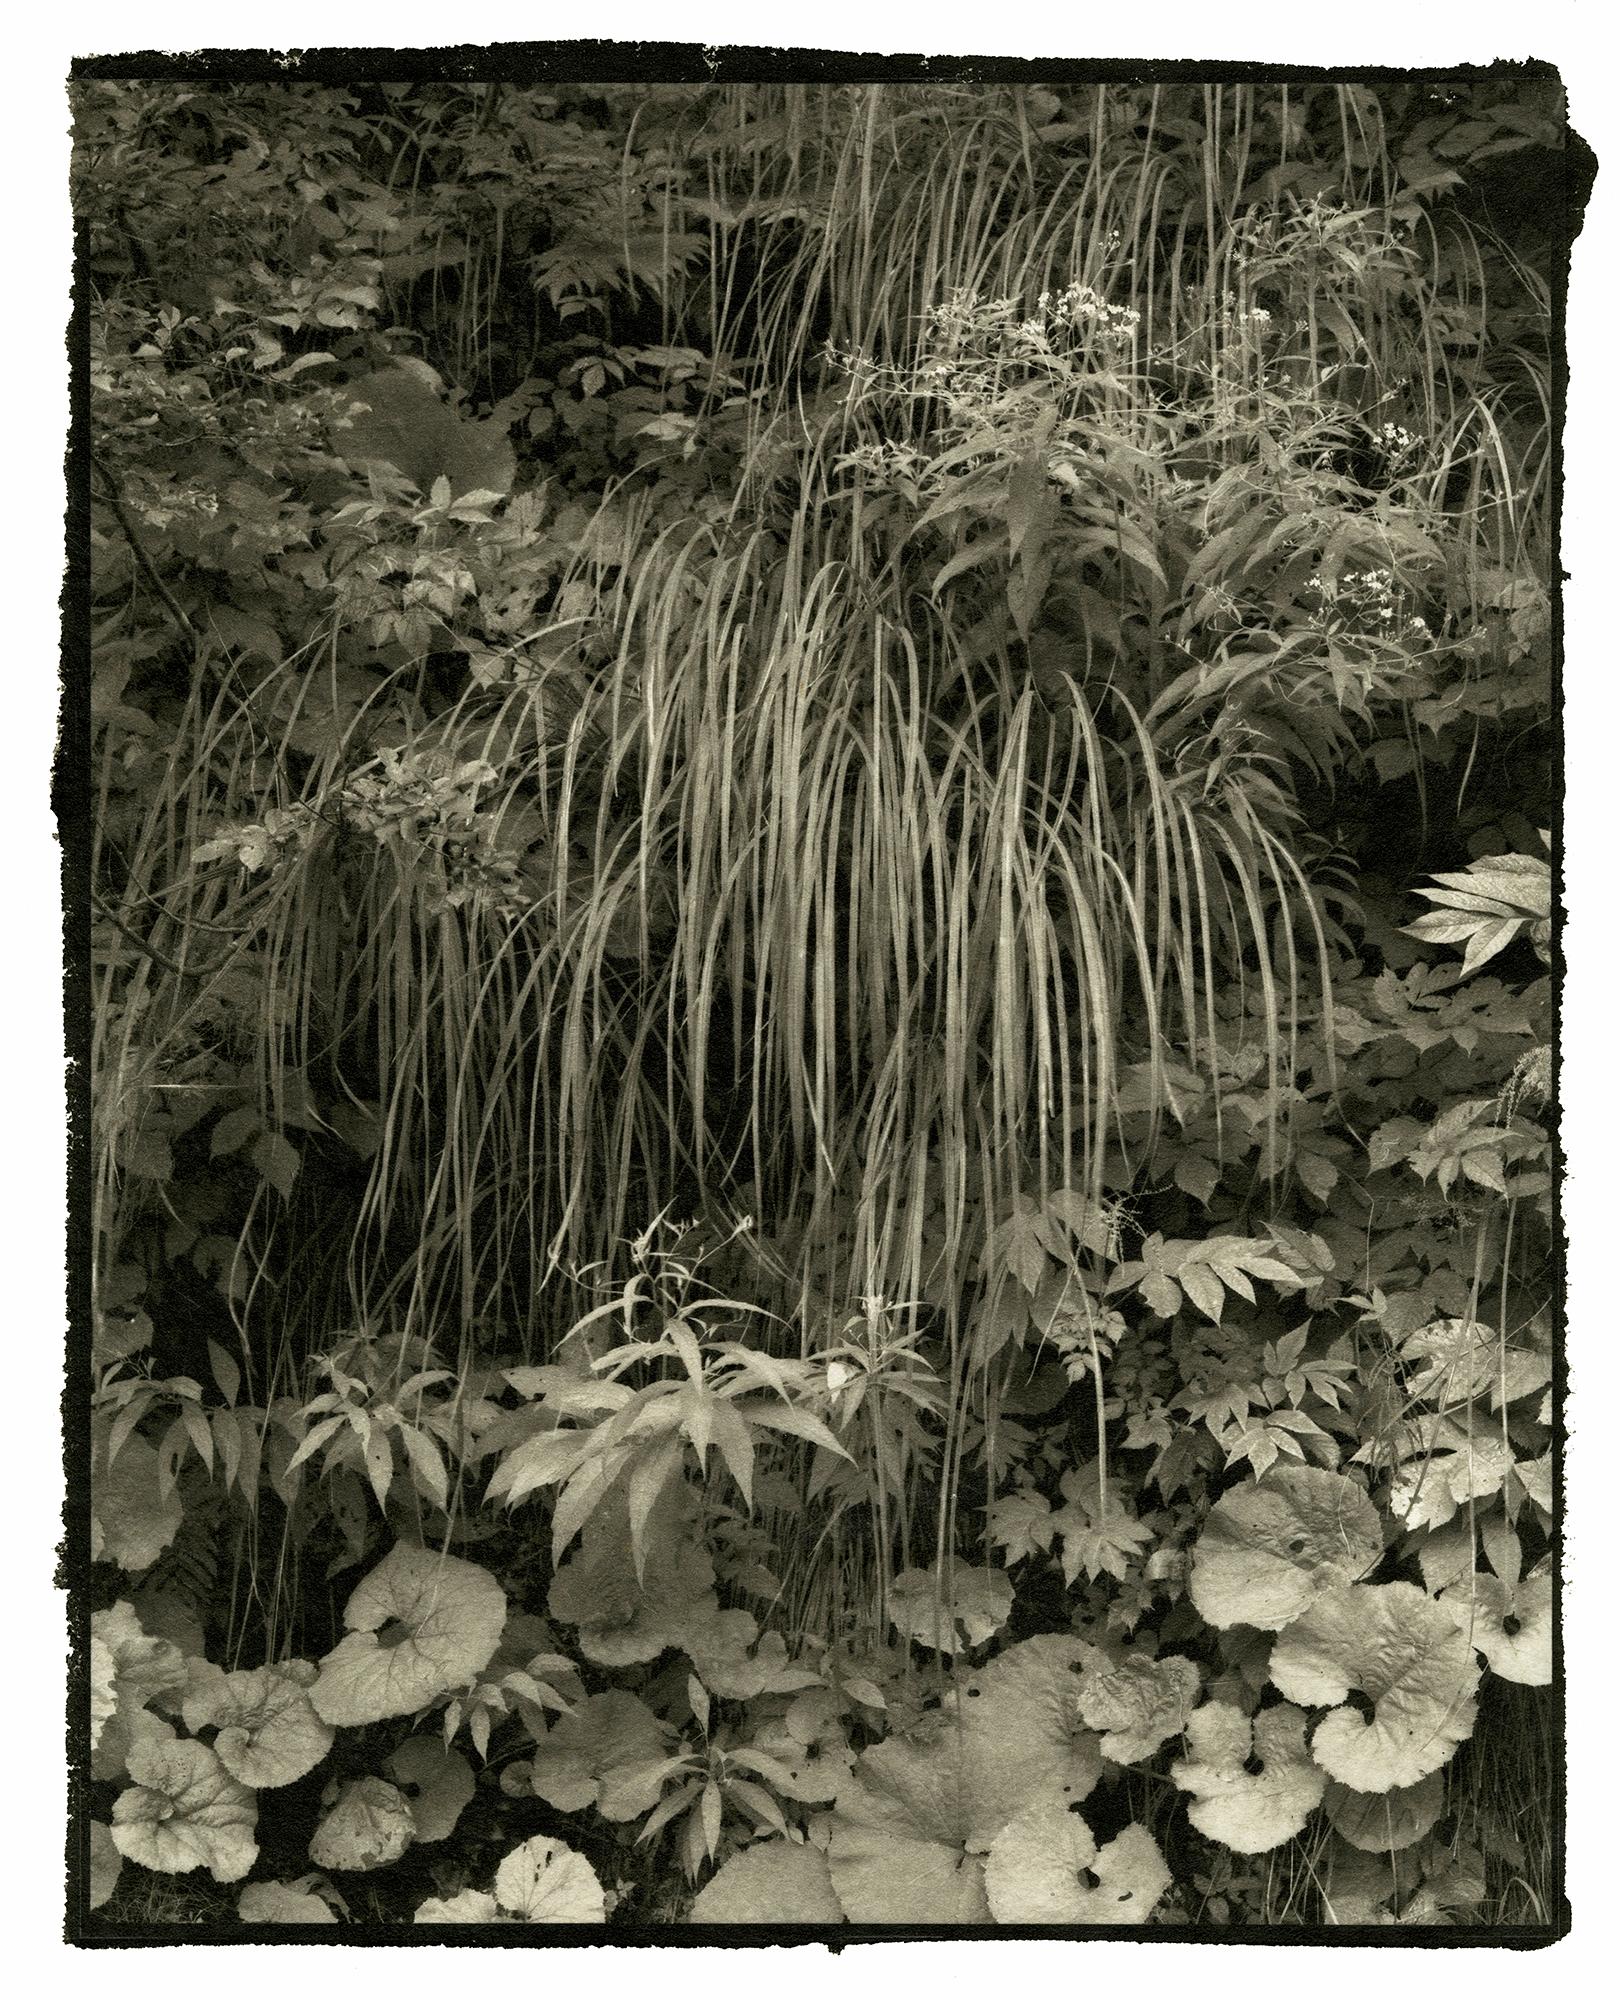 Nobuyuki Kobayashi Landscape Photograph - Kei 1 - 21st Century, Platinum/Palladium Print, Contemporary B&W photography